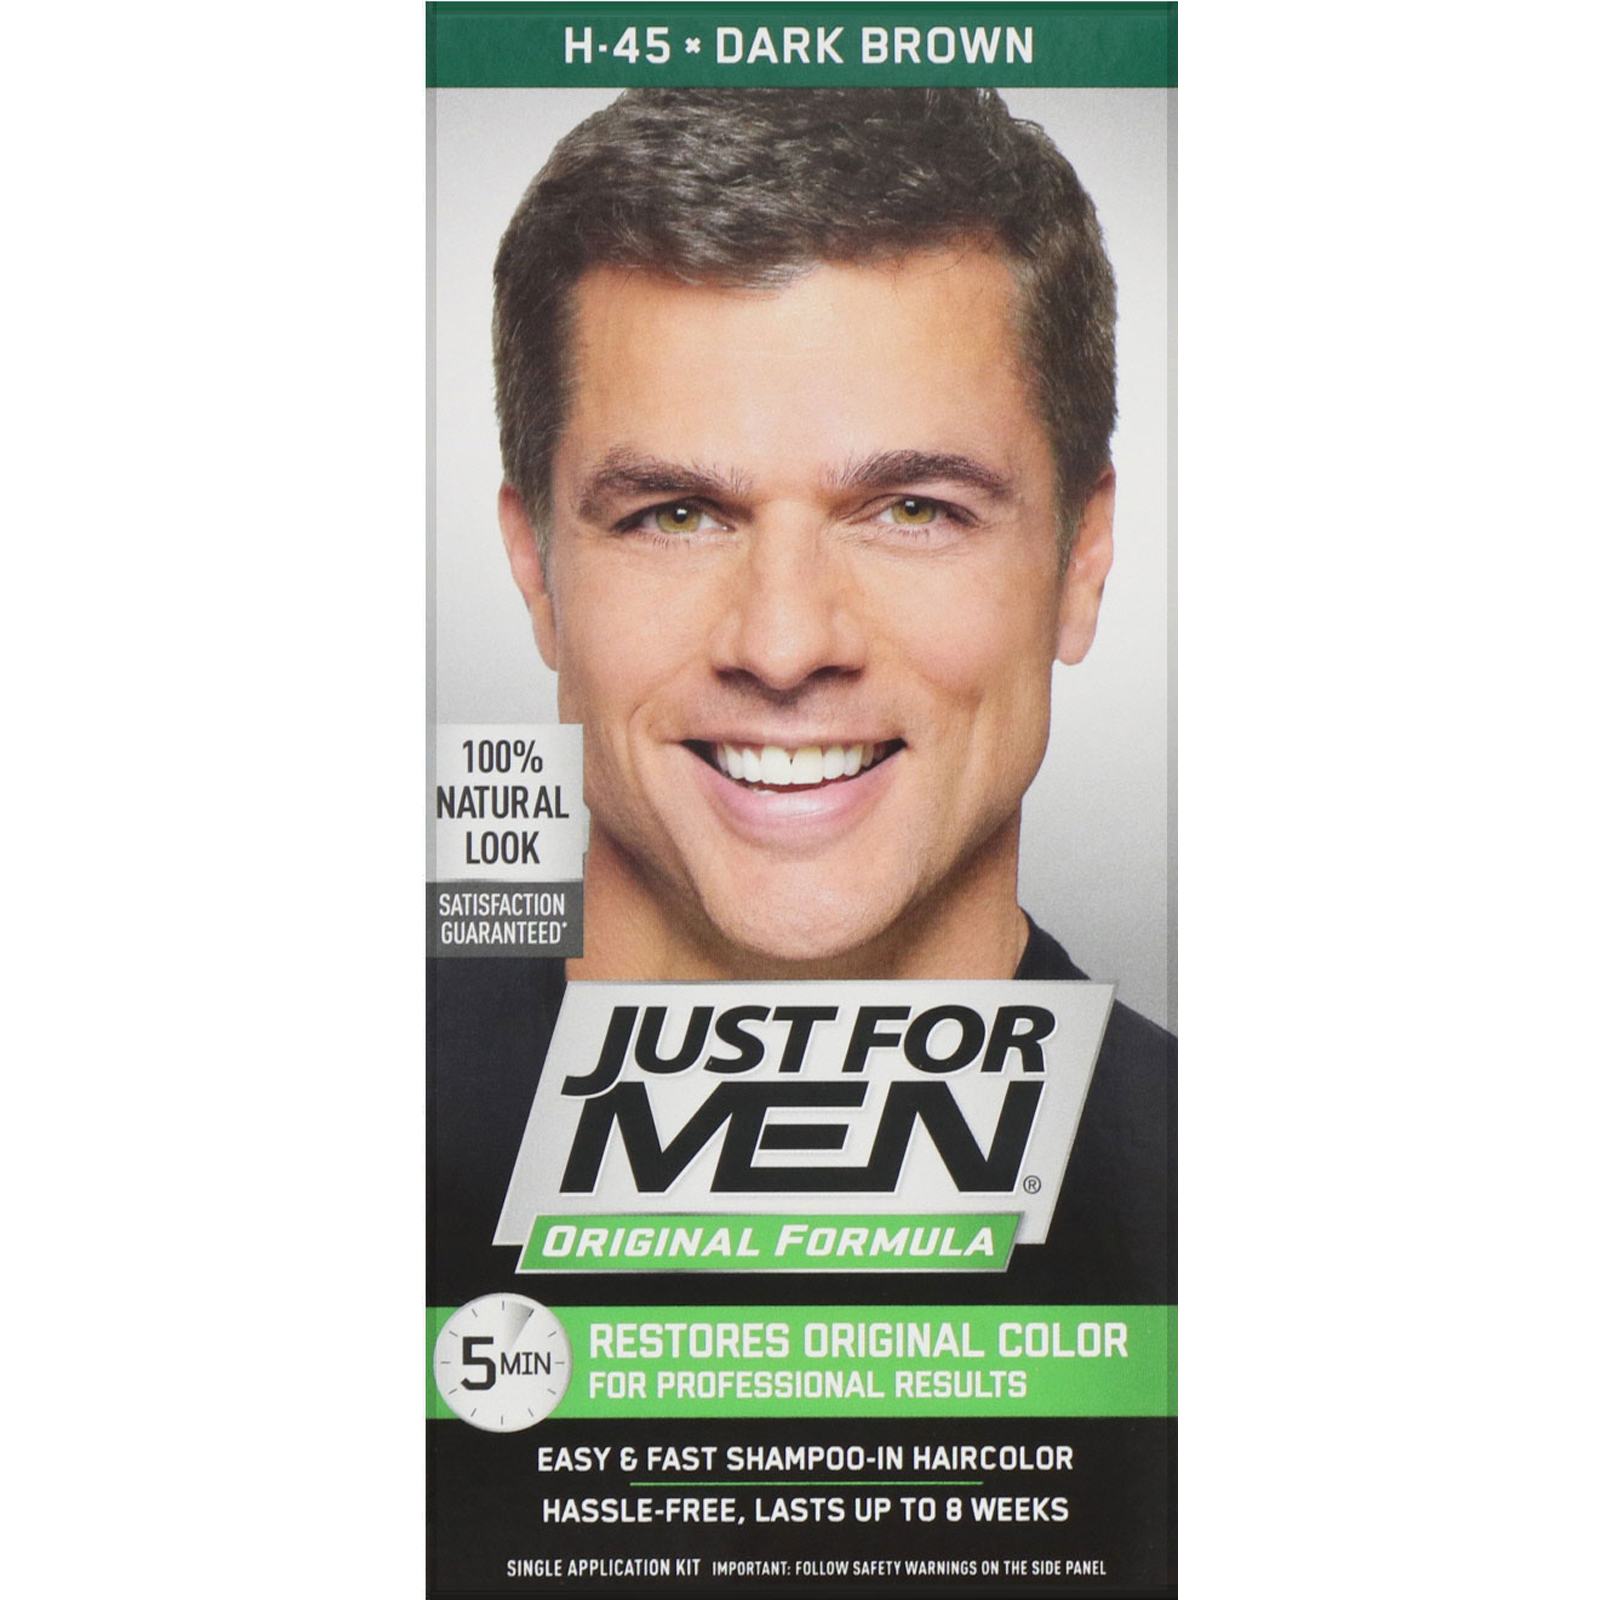 Just For Men Original Formula Men S Hair Color Dark Brown H 45 Single Application Kit